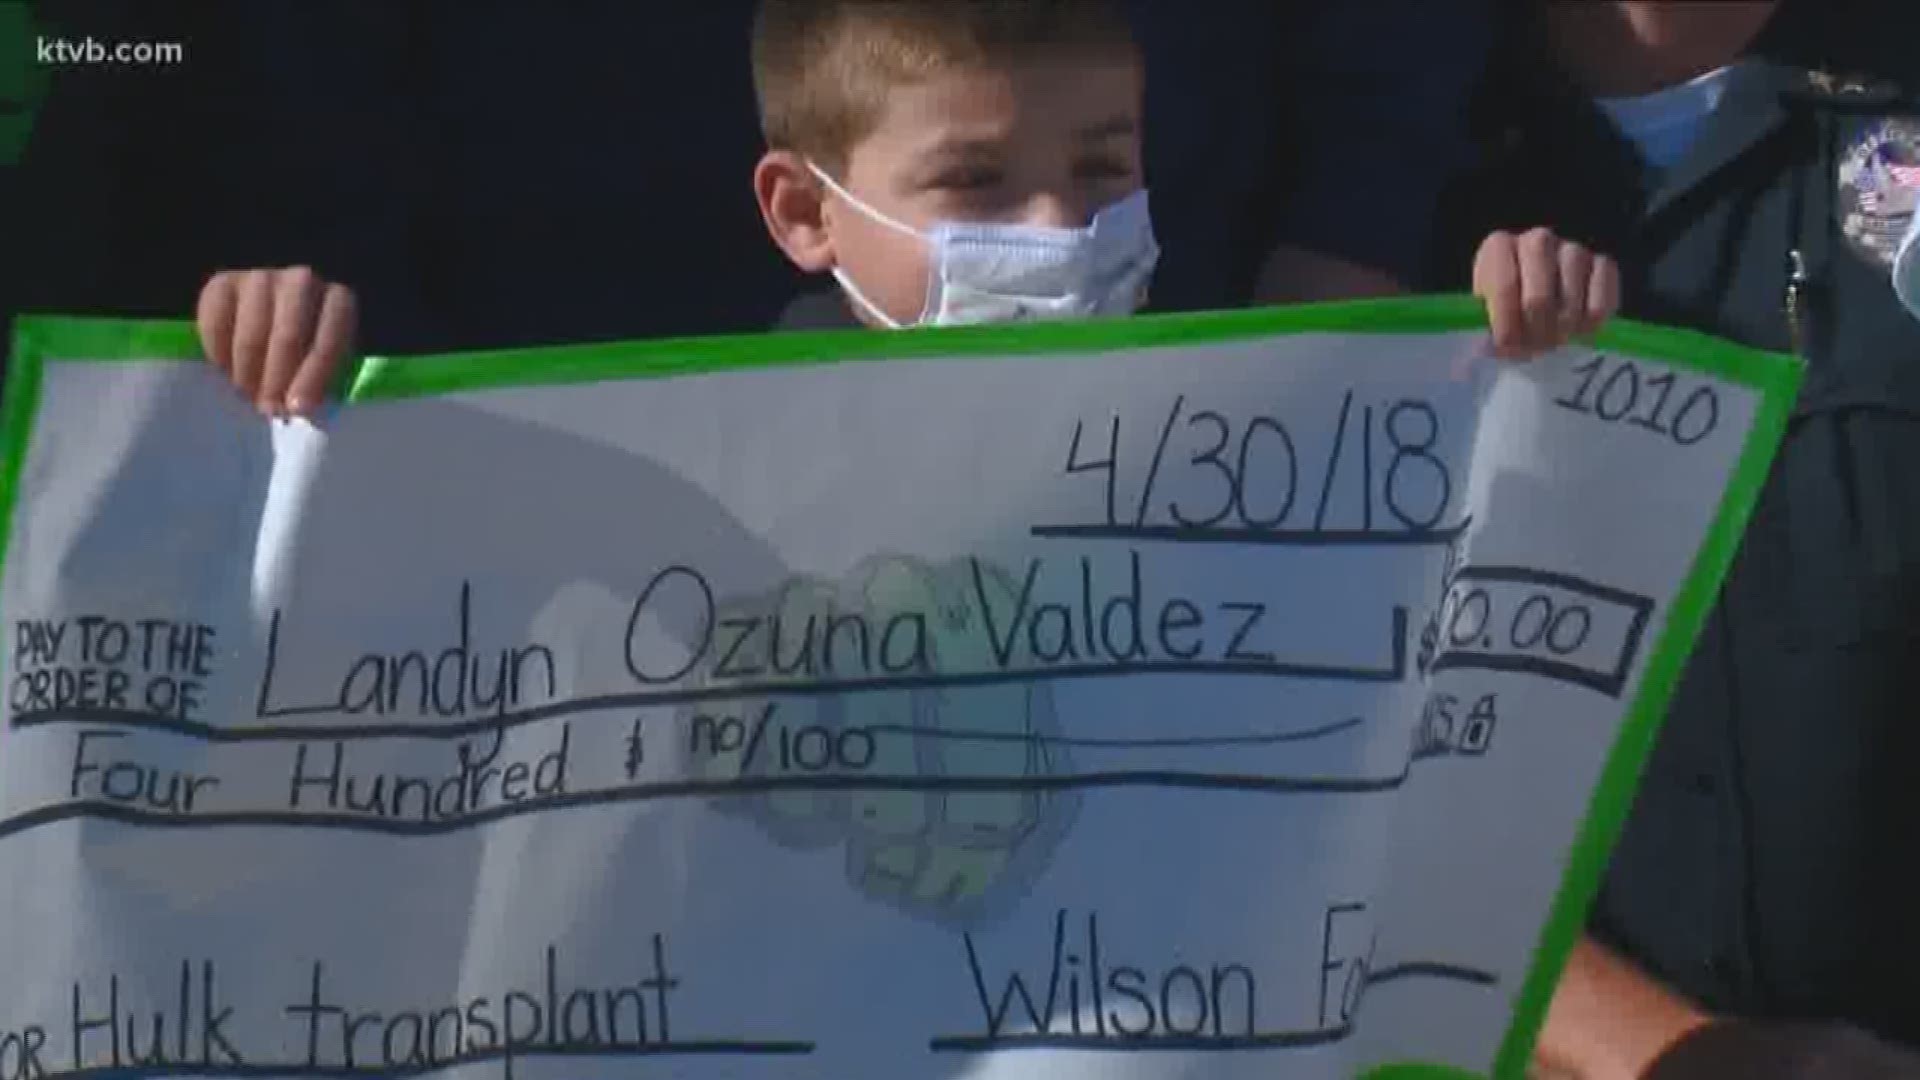 Landyn Ozuna Valdez got a hero's welcome when he returned to school after getting a kidney transplant.